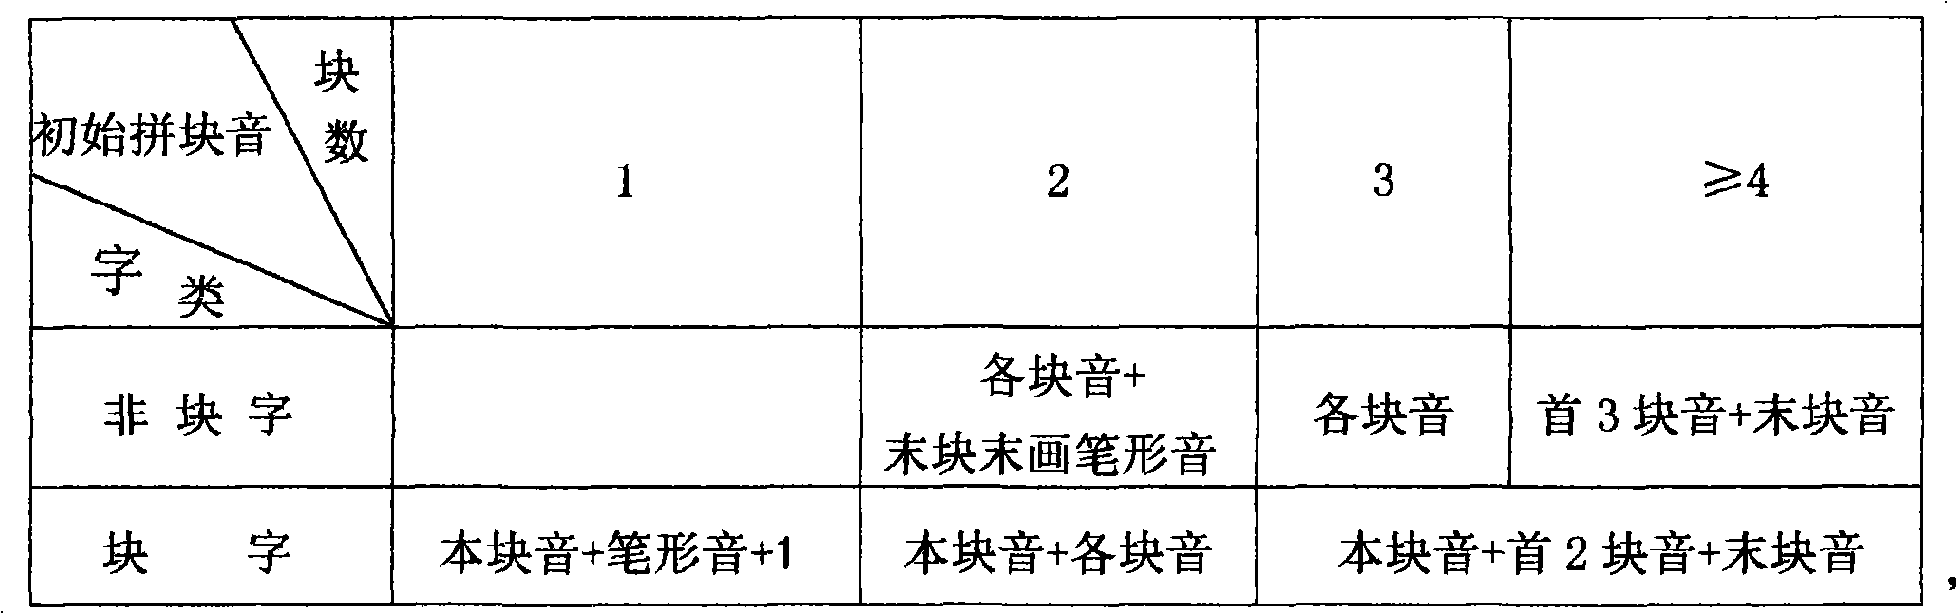 Novel block Pinyin scheme for Hanzi input